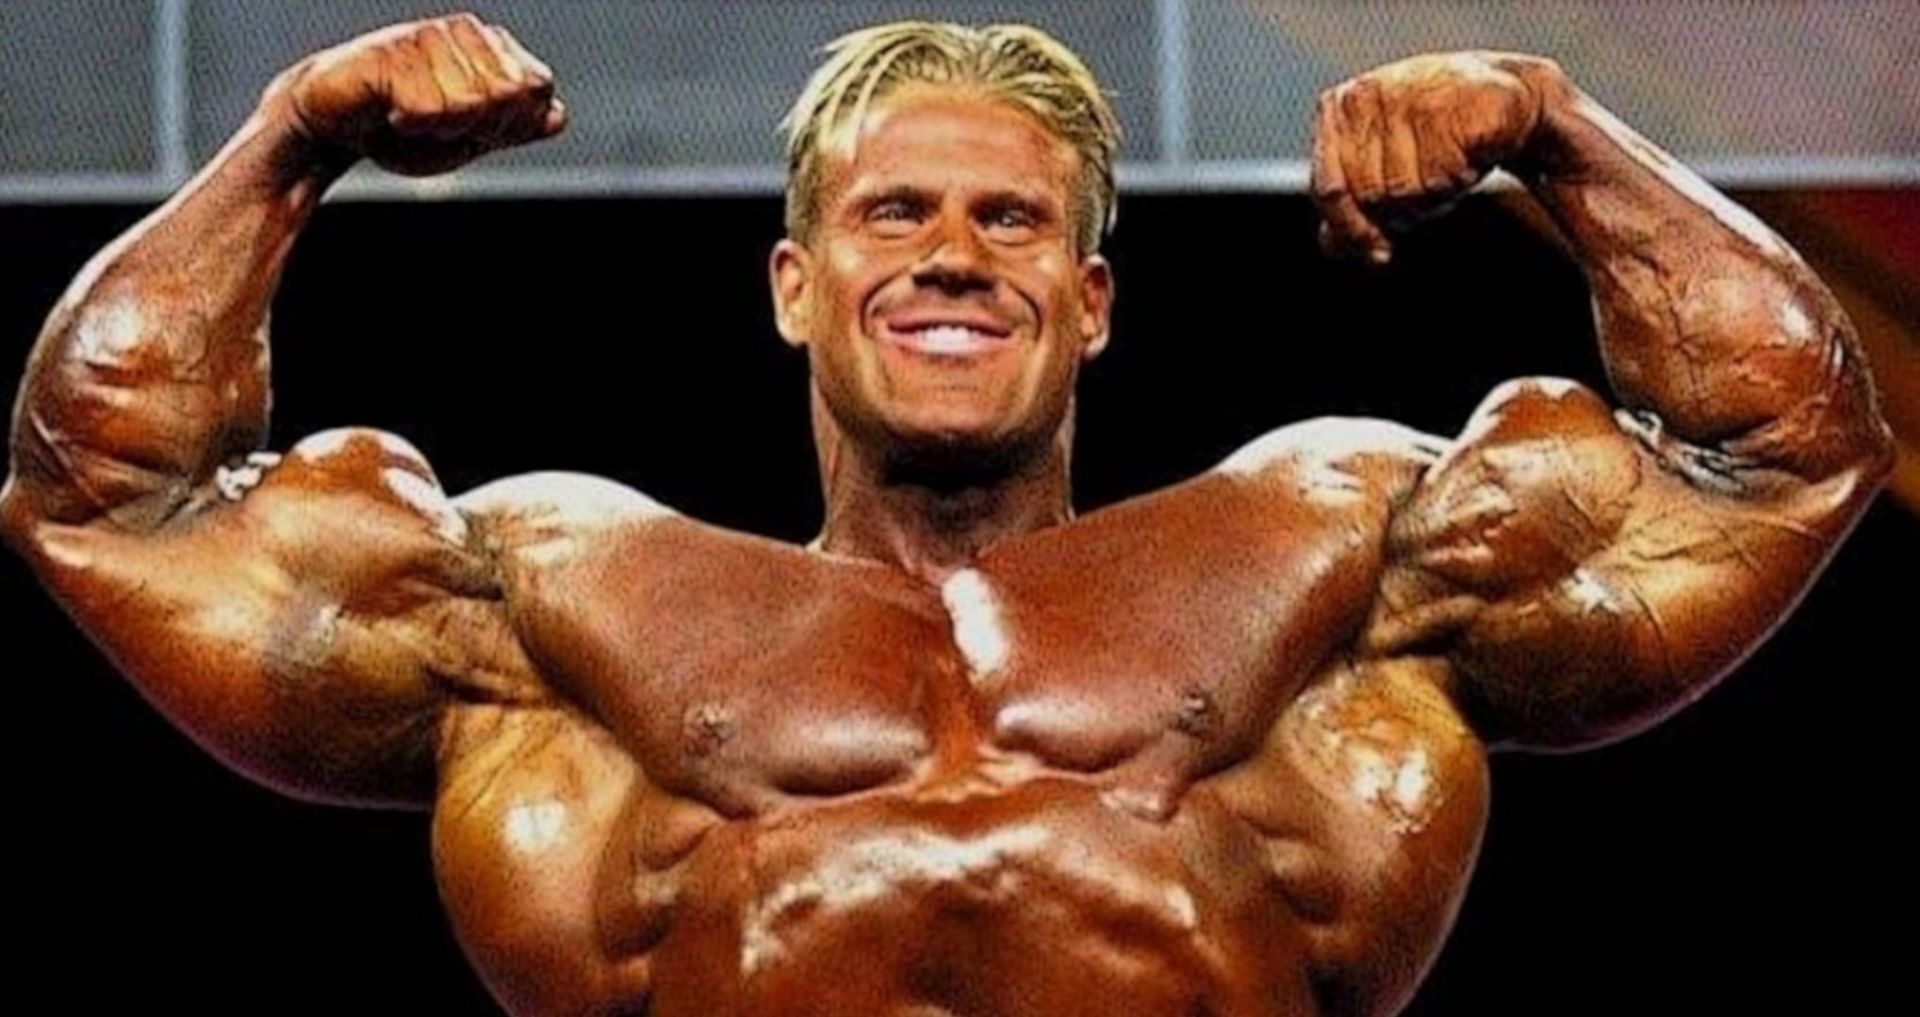 Who is bodybuilder Jay Cutler?